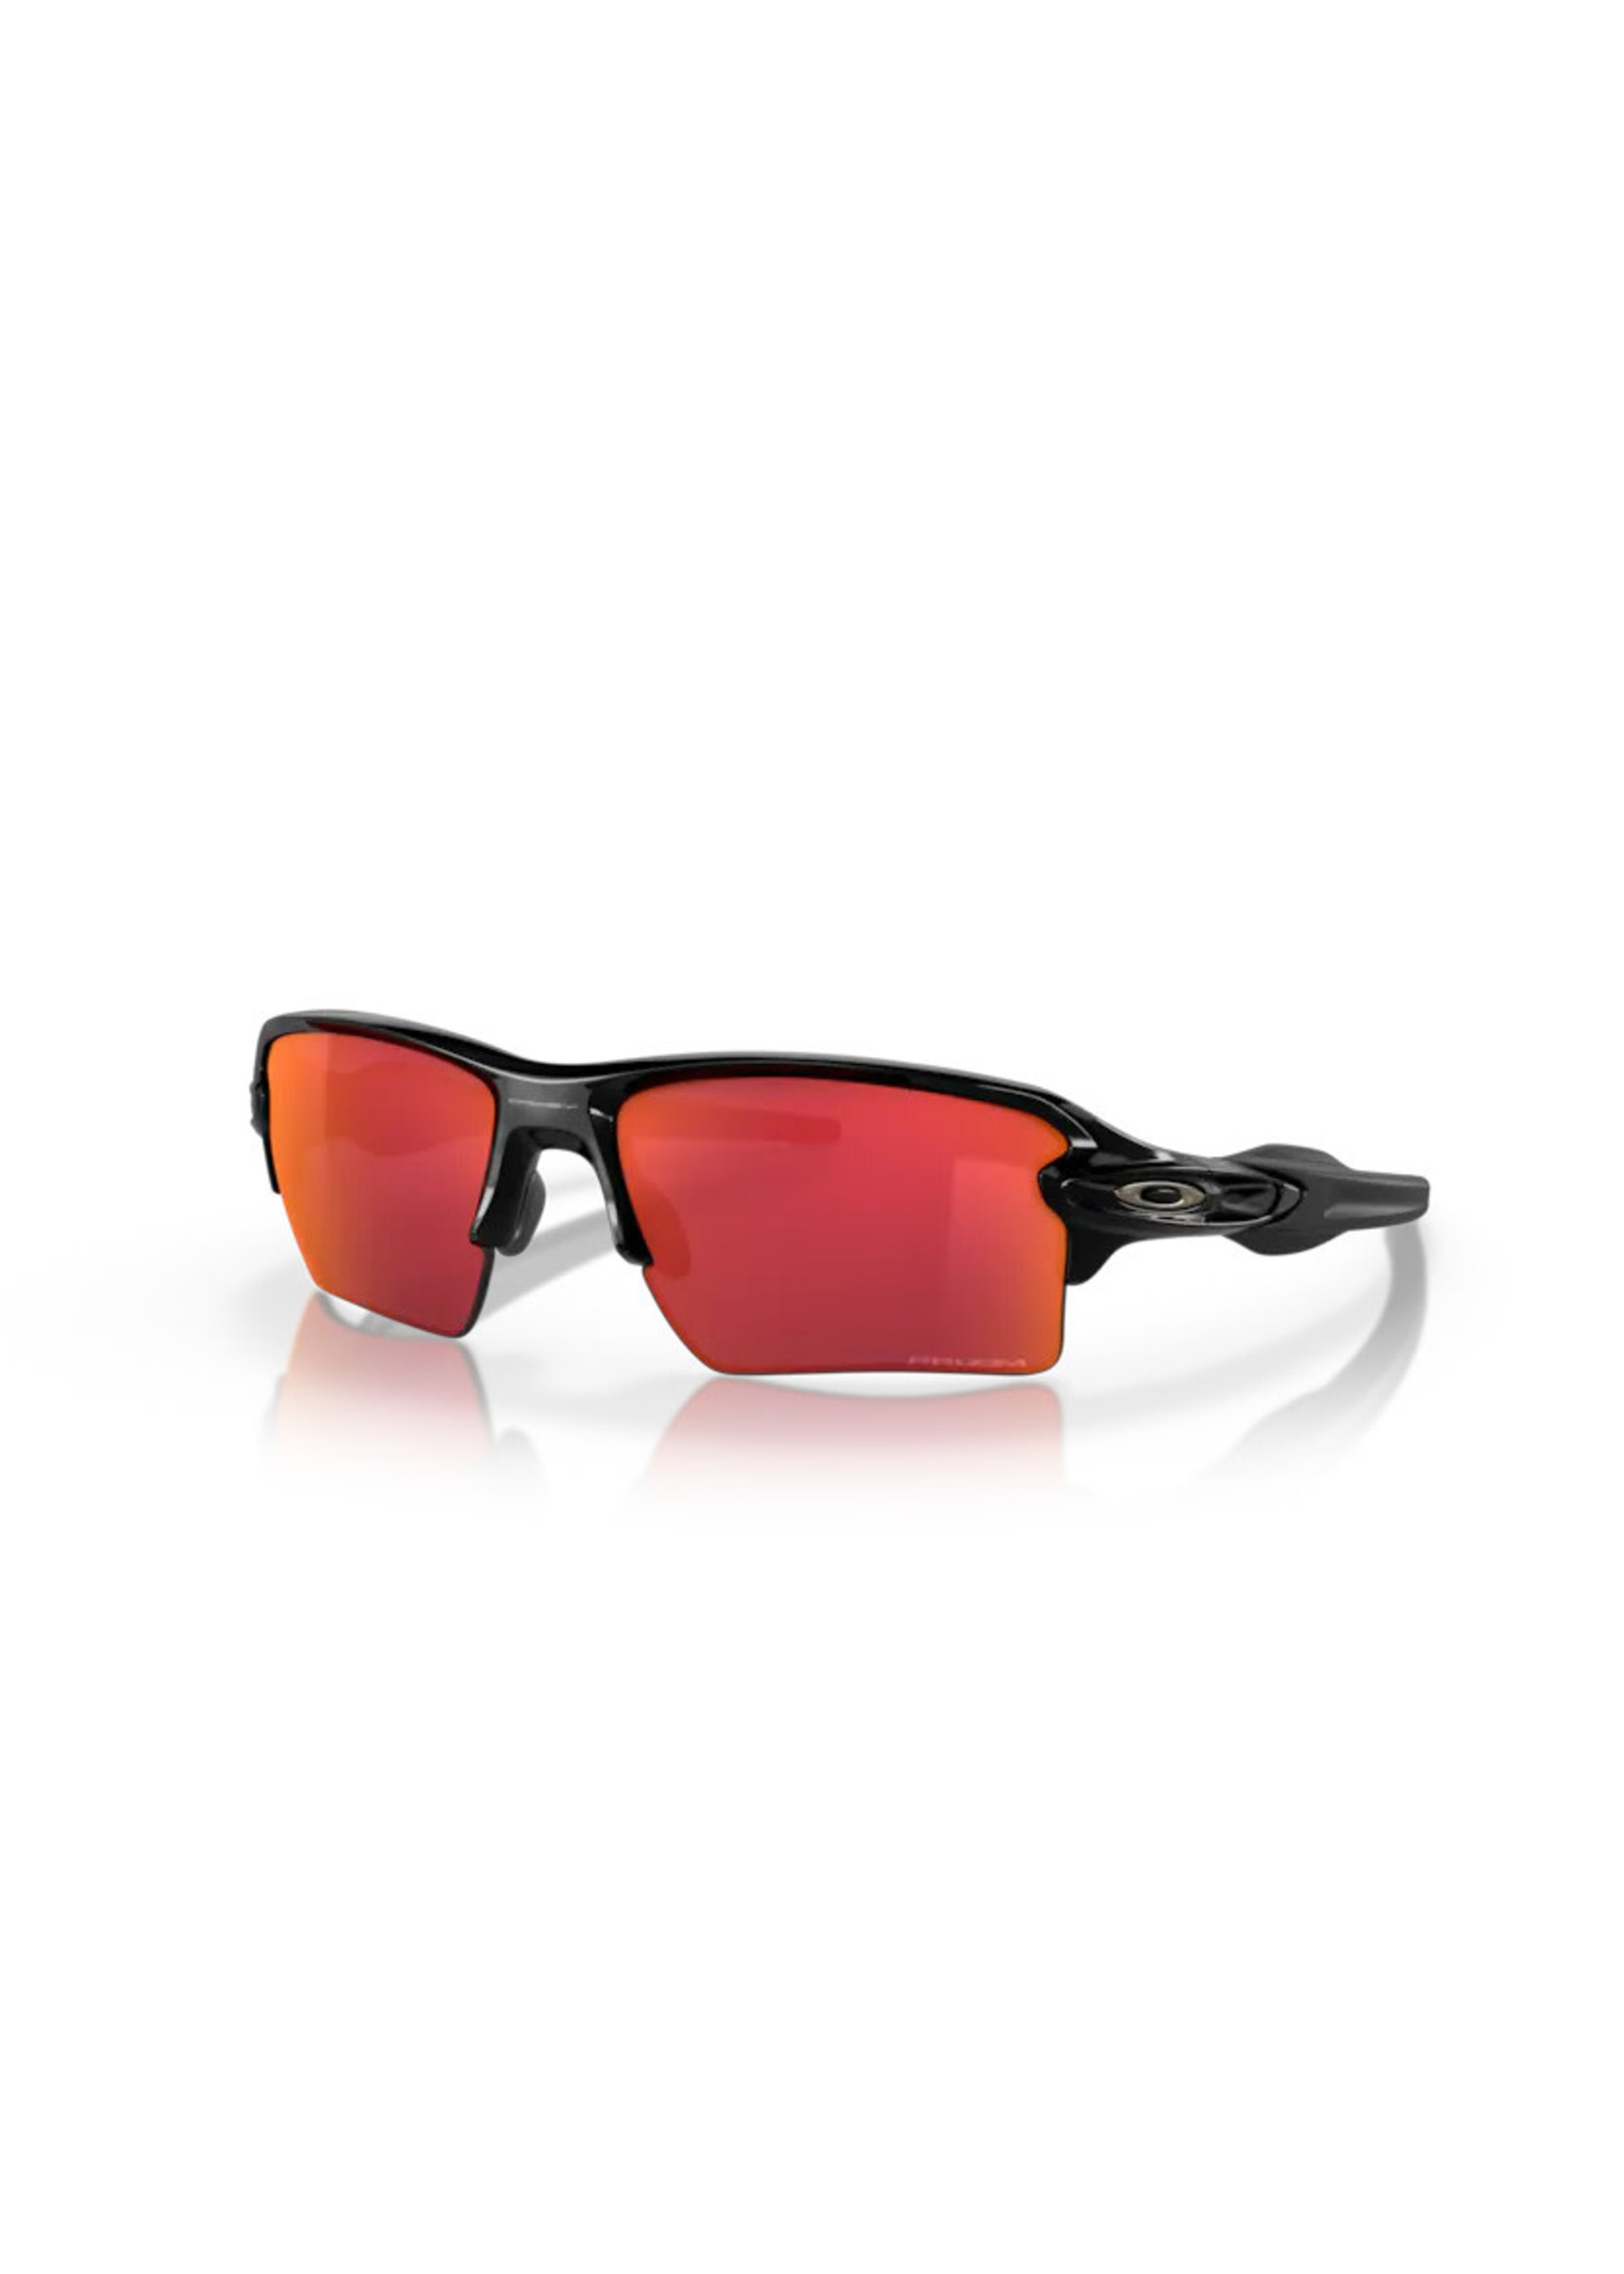 OAKLEY Flak 2.0 XL Polished Black w/ PRIZM Field Sunglasses- Unisex